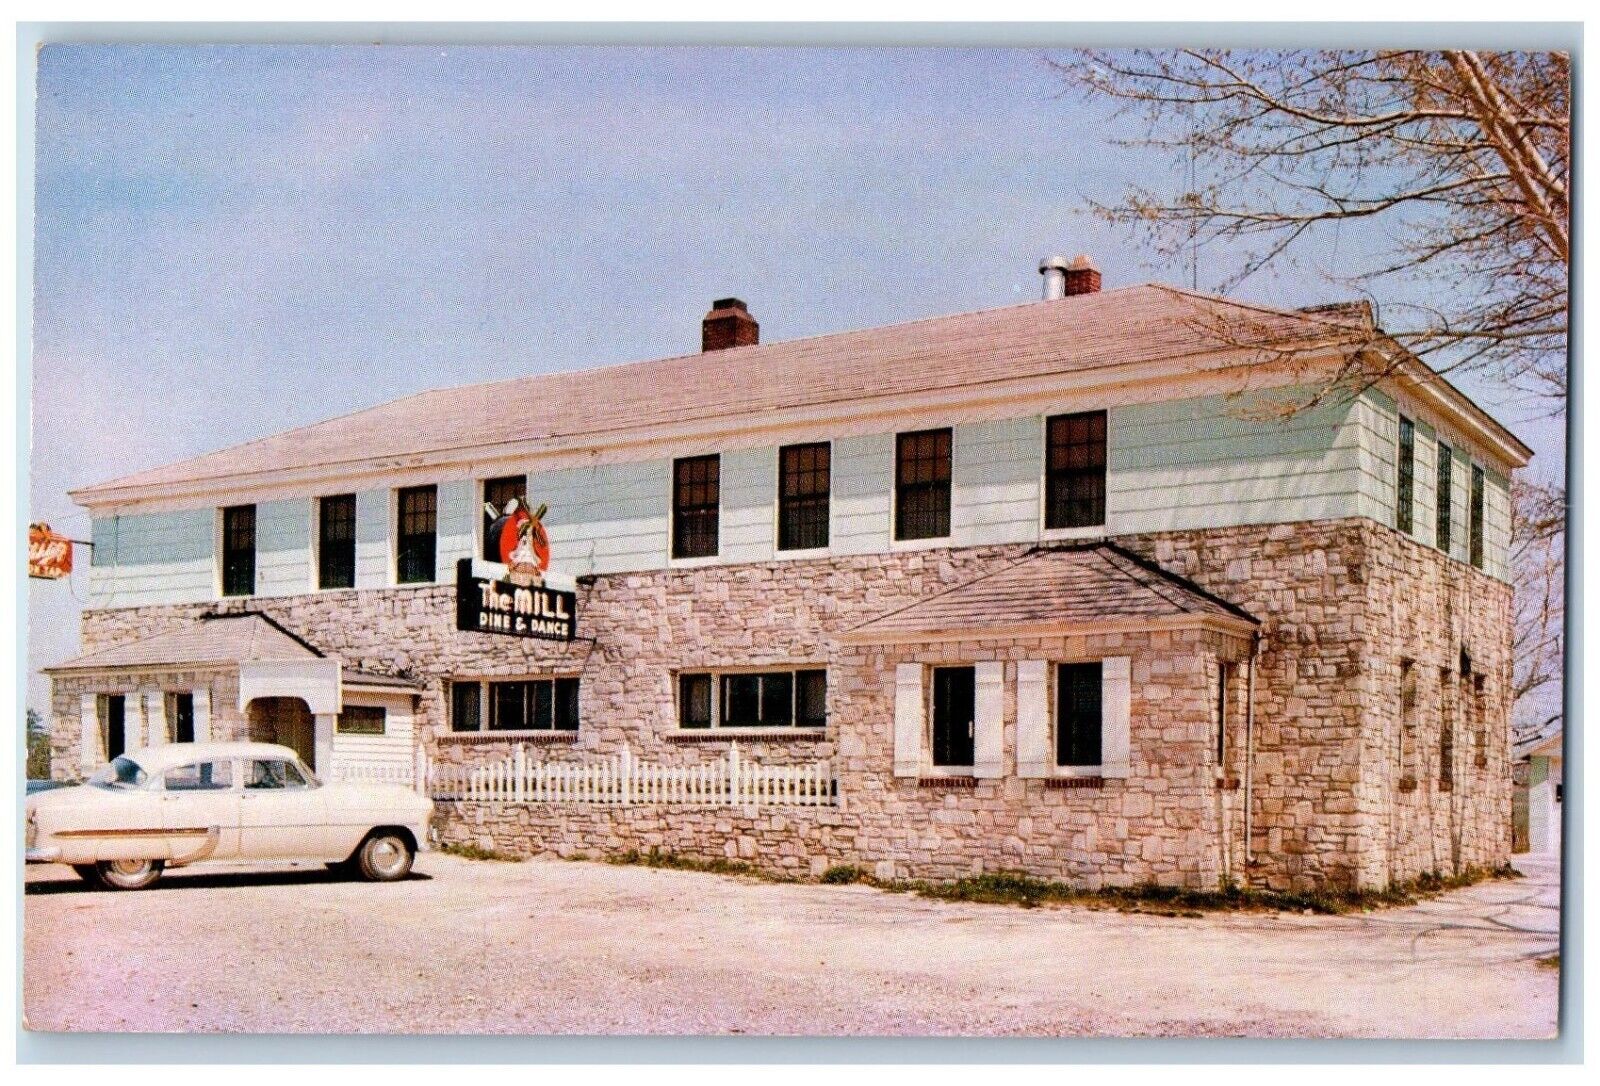 Sturgeon Bay Wisconsin WI Postcard The Mill Dine & Dance Restaurant Cars Vintage